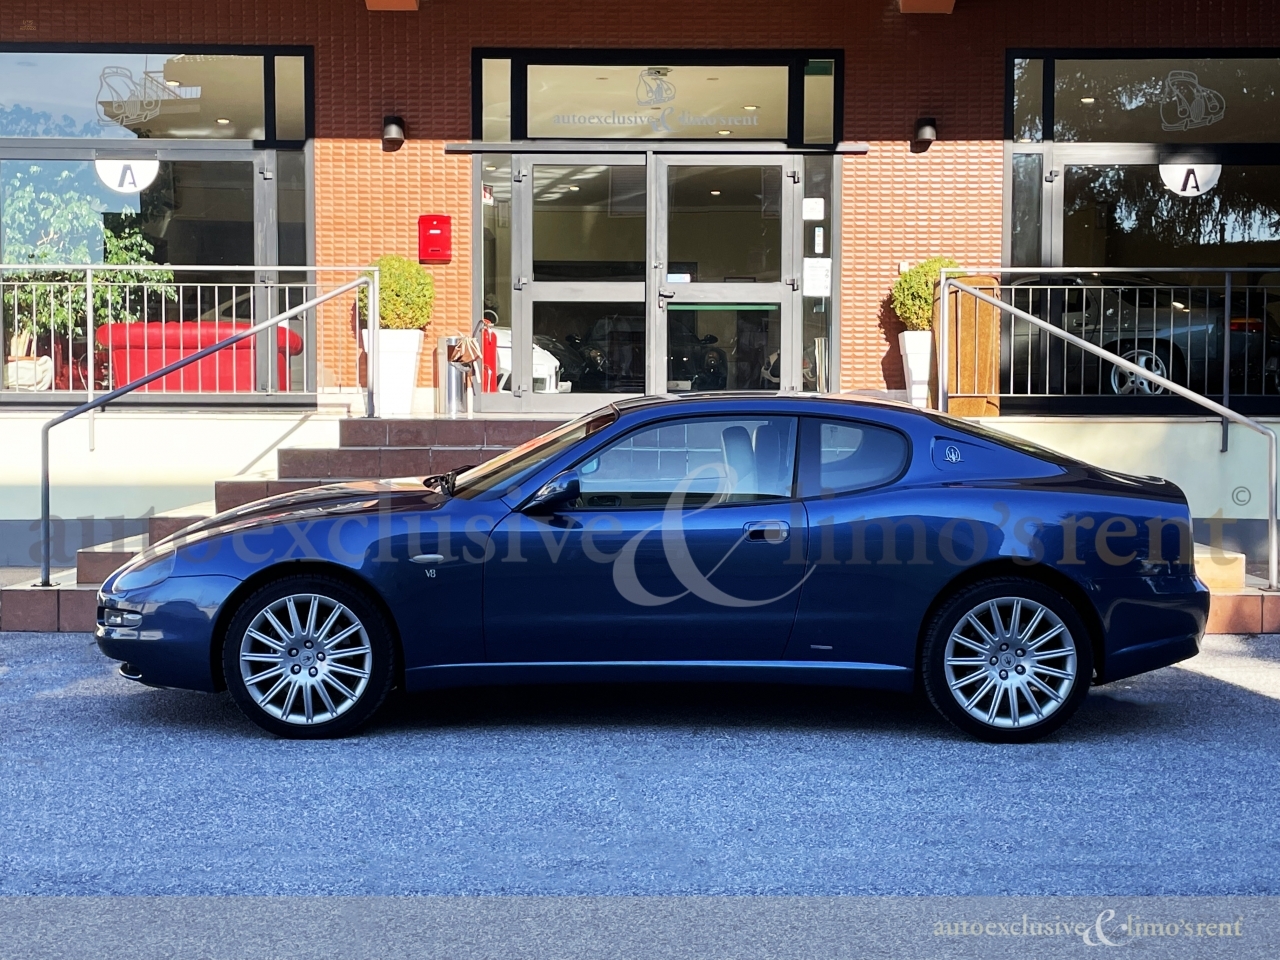 car-21933-Maserati_Coupe_42__V8_32V_Cambiocorsa-14-.jpg